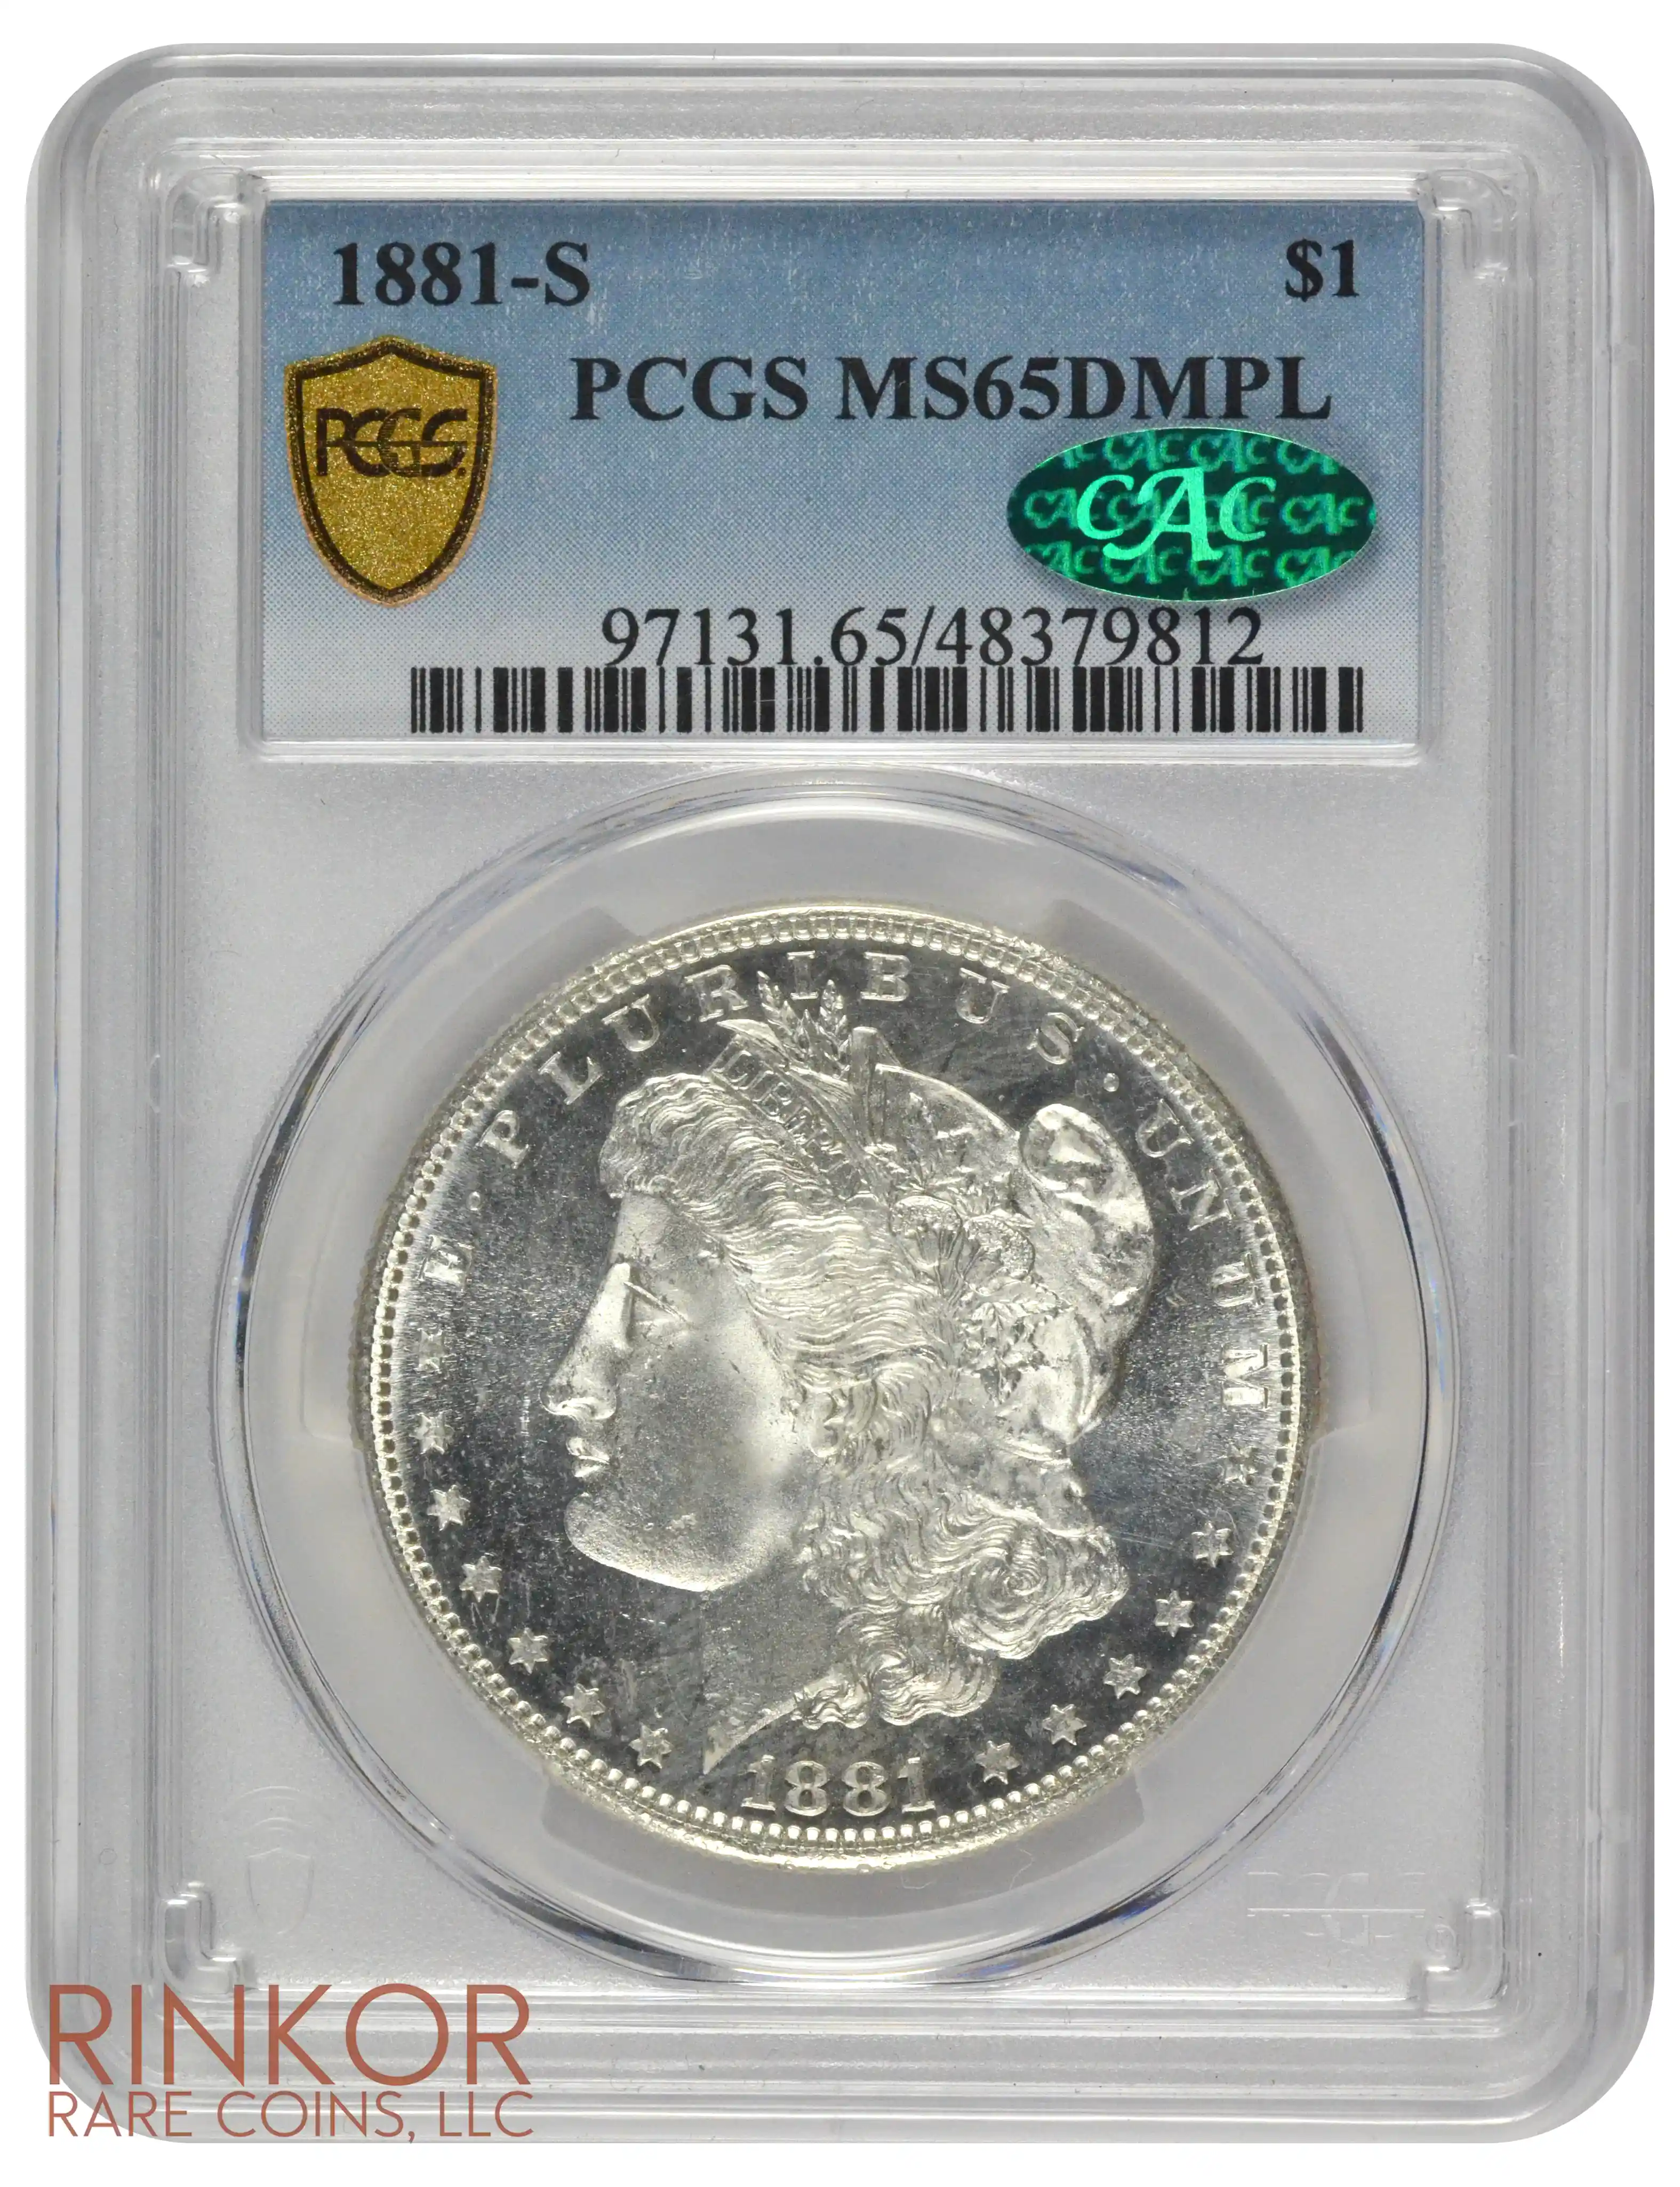 1881-S $1 PCGS MS 65 DMPL CAC